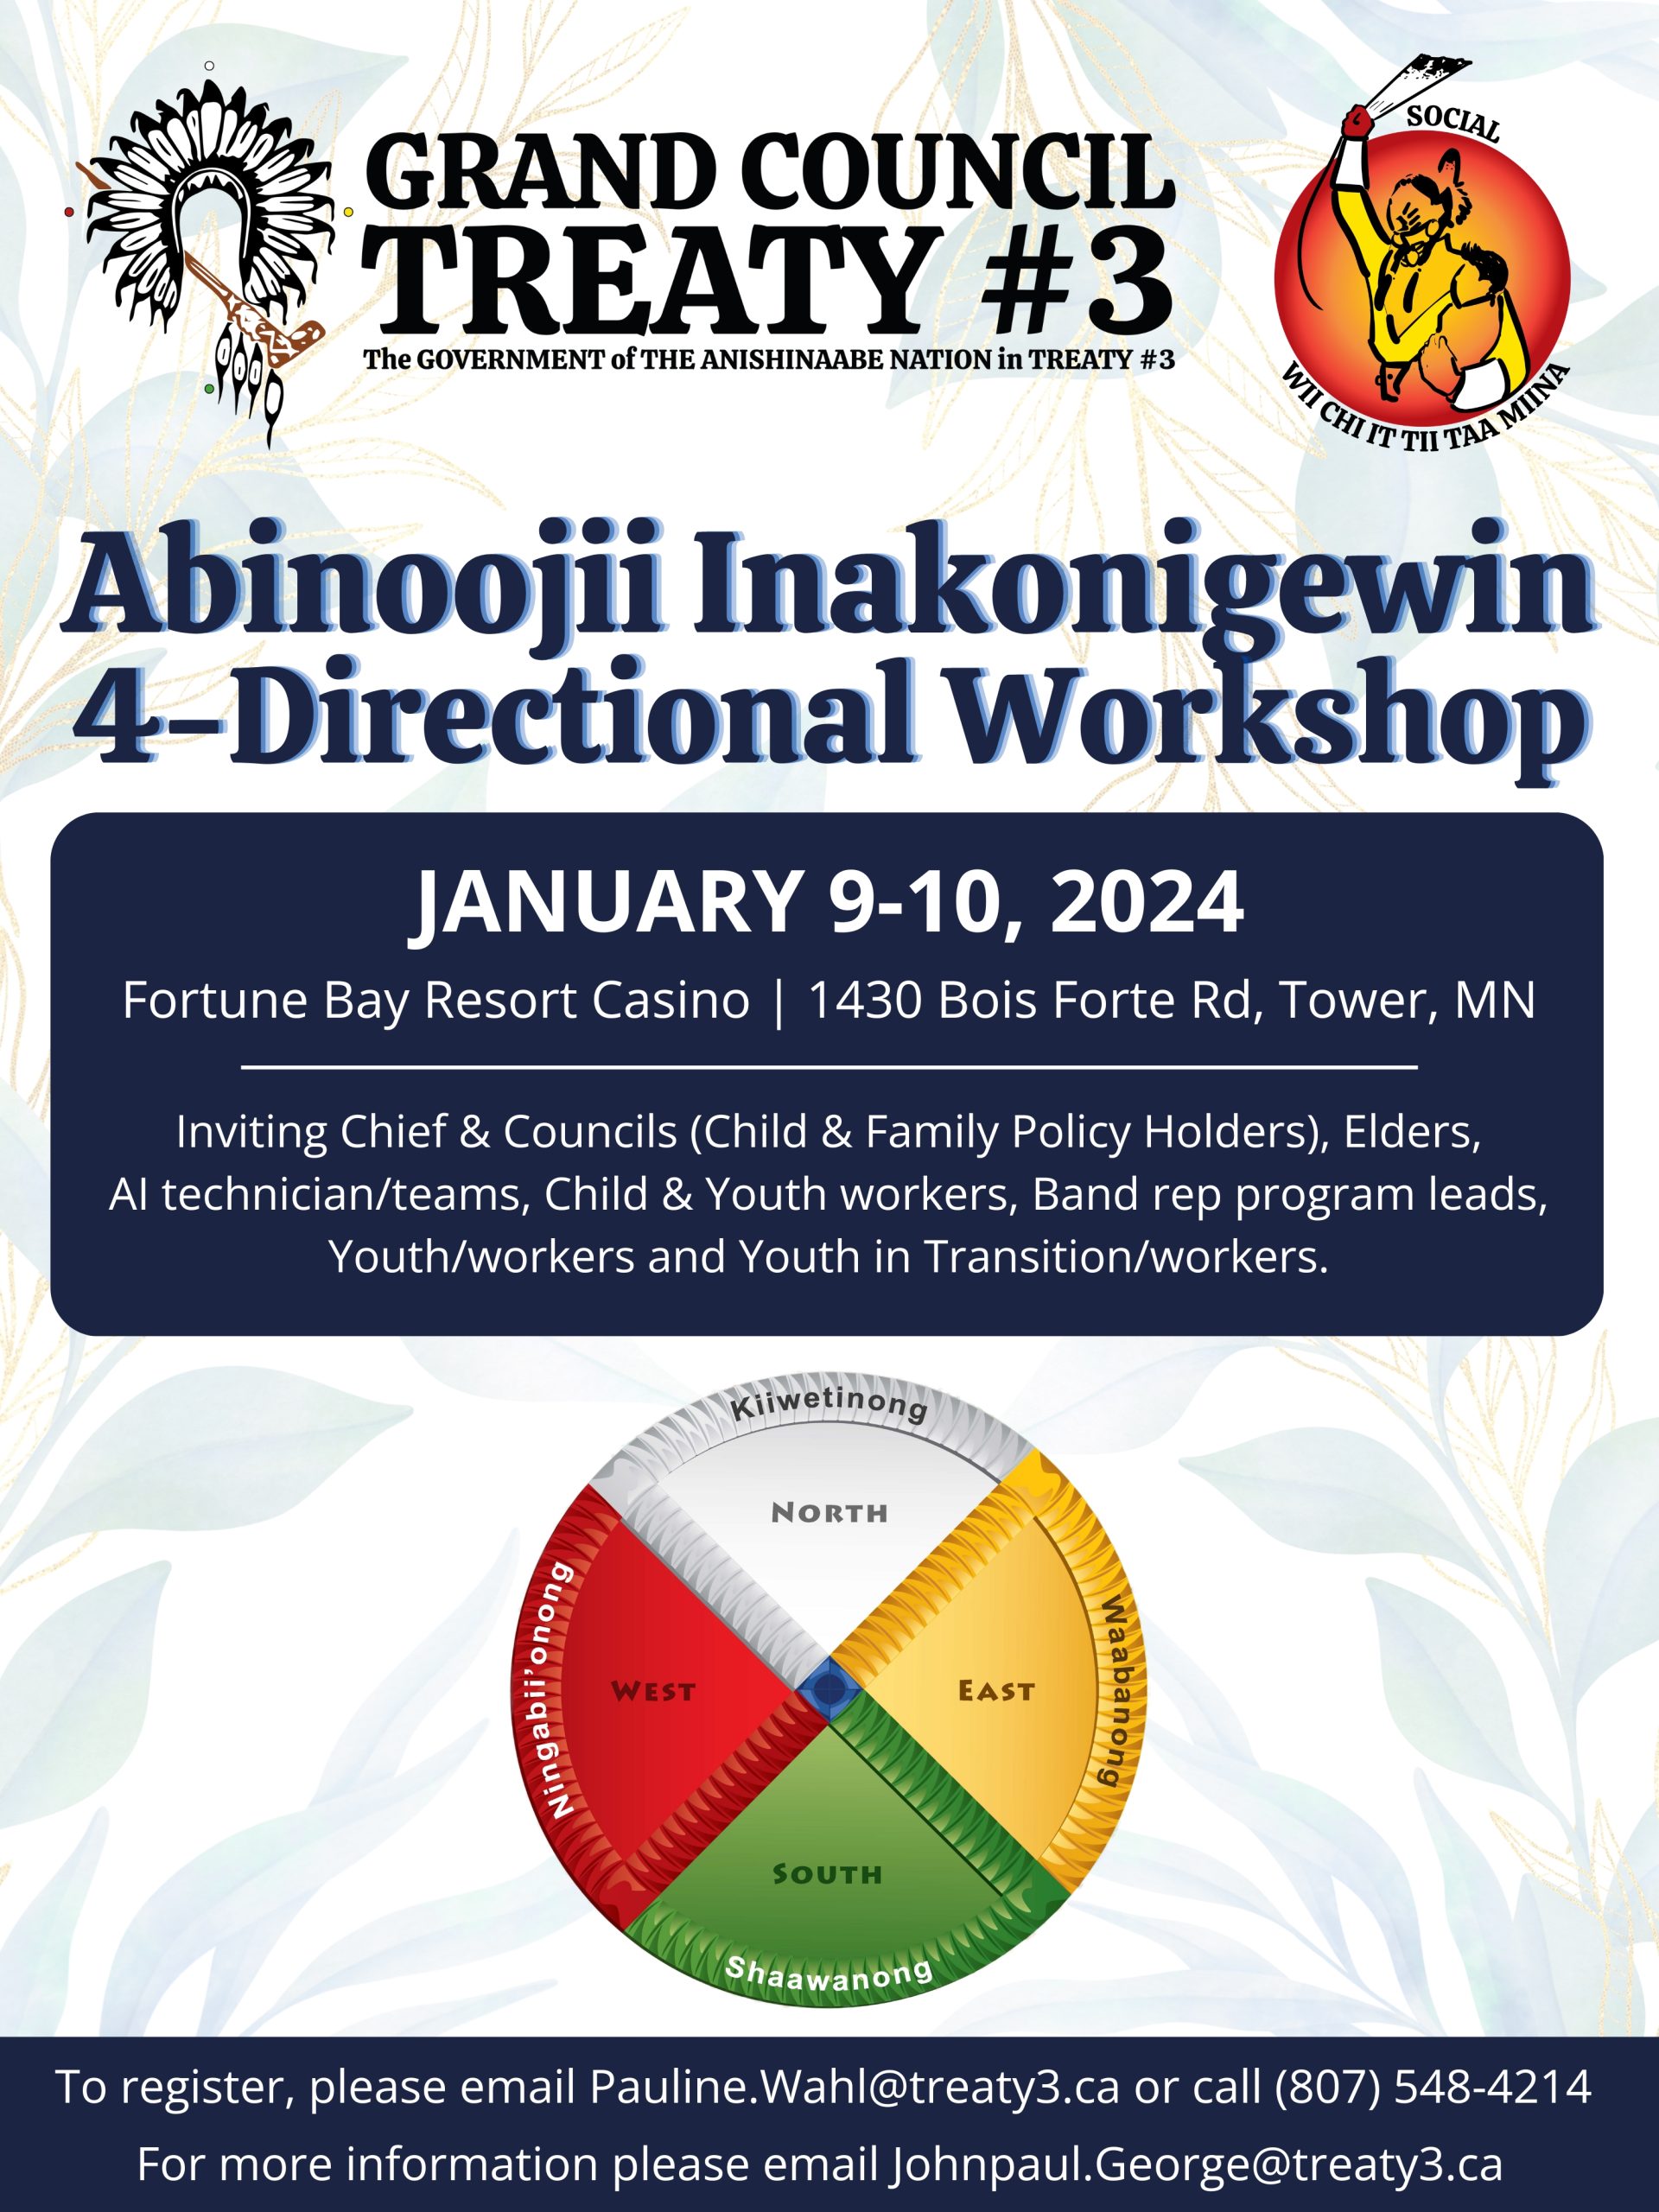 Abinoojii Inakonigewin 4-Directional Workshop (Fortune Bay)